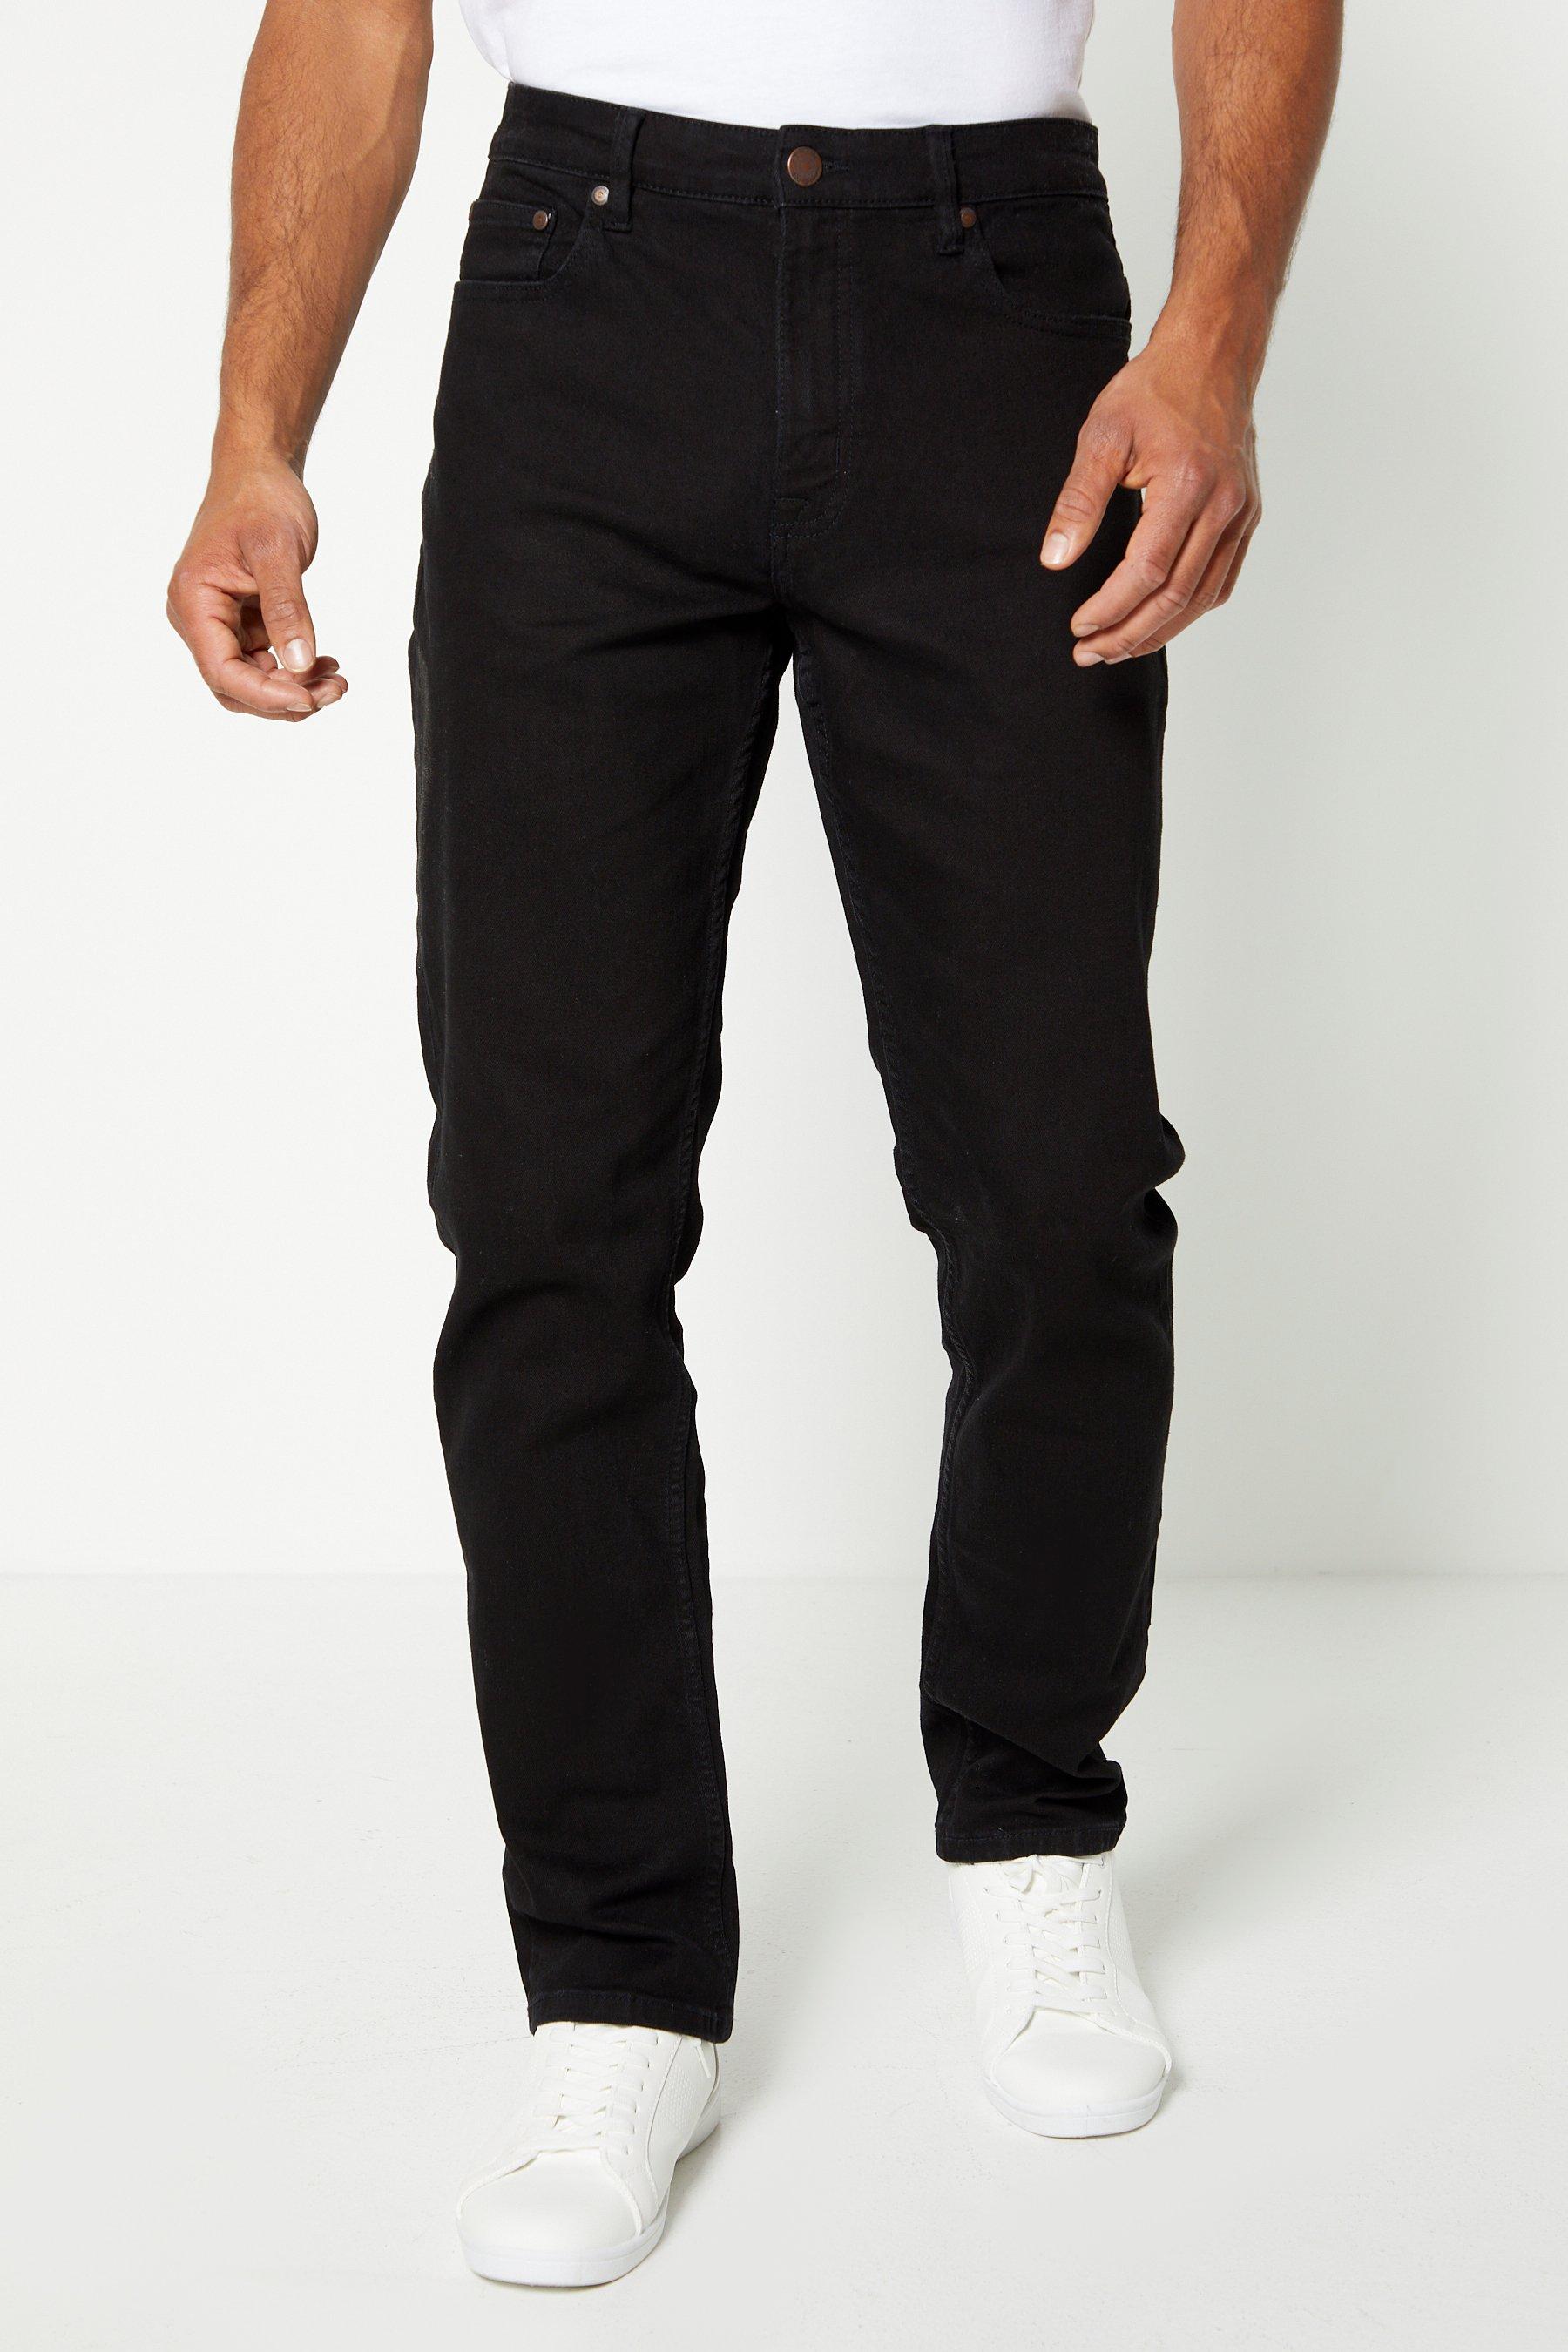 ben sherman black straight fit jeans - mens - size: 30 waist 30 leg